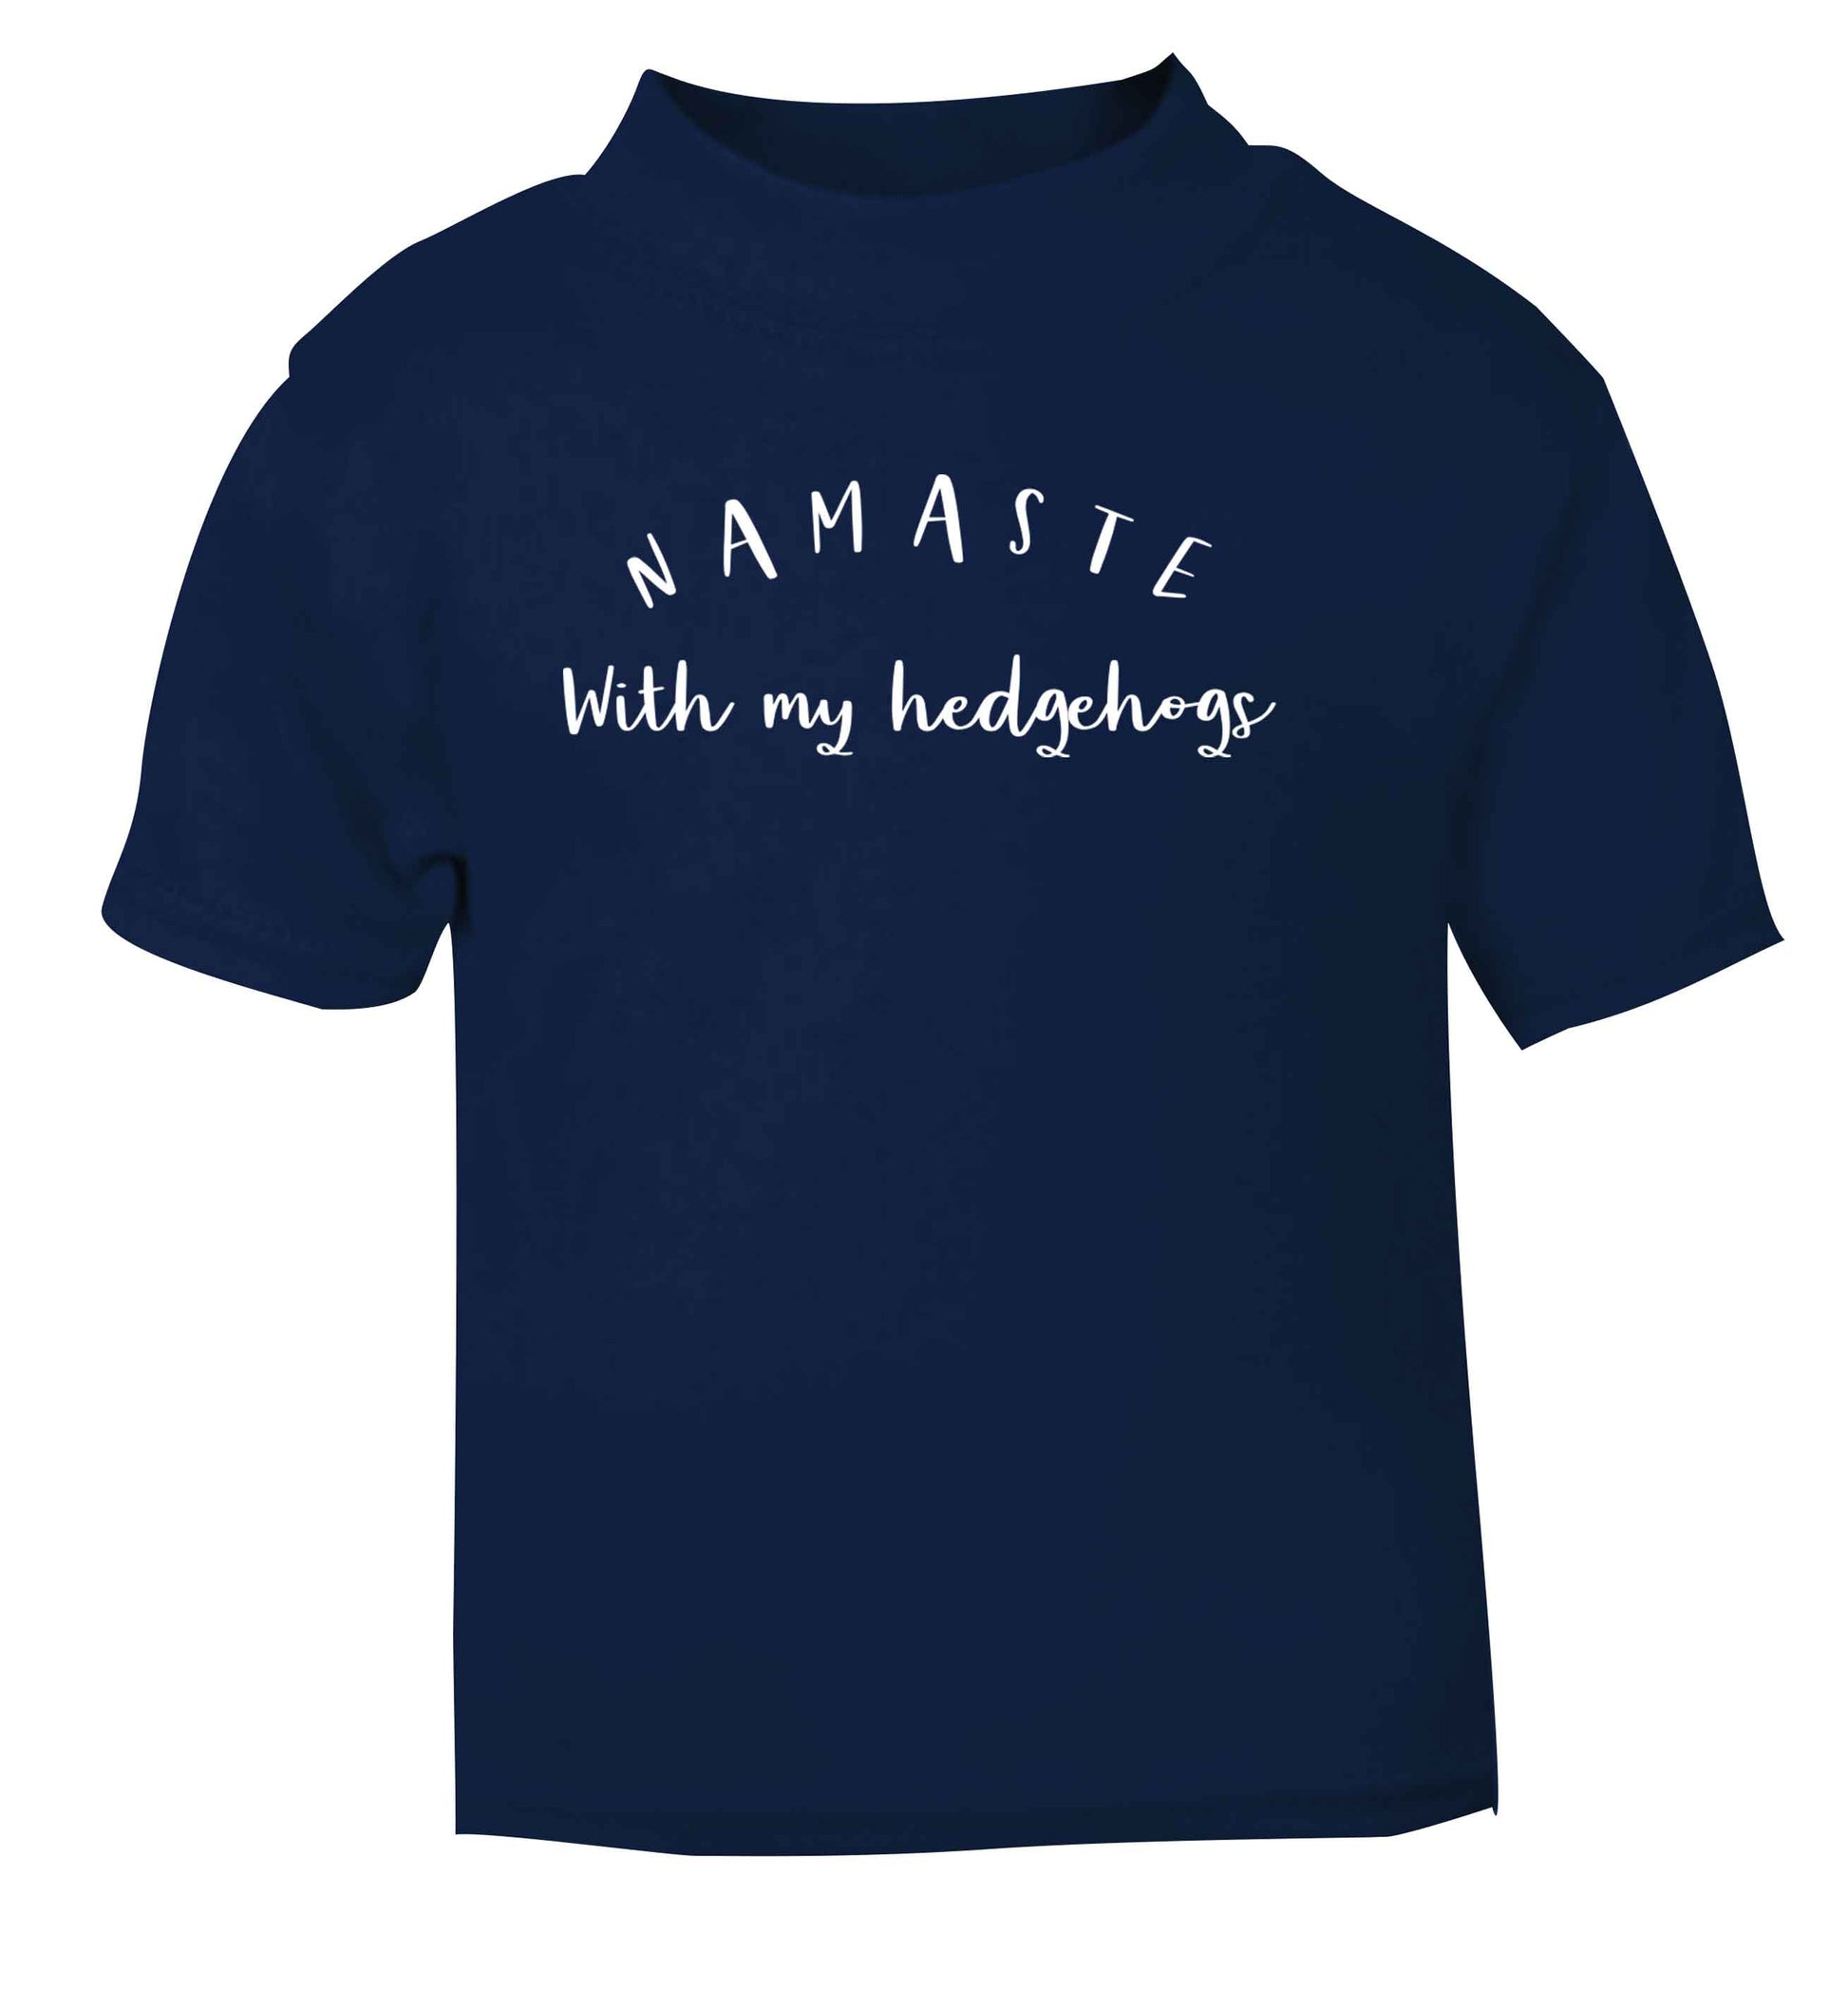 Namaste with my hedgehog navy Baby Toddler Tshirt 2 Years